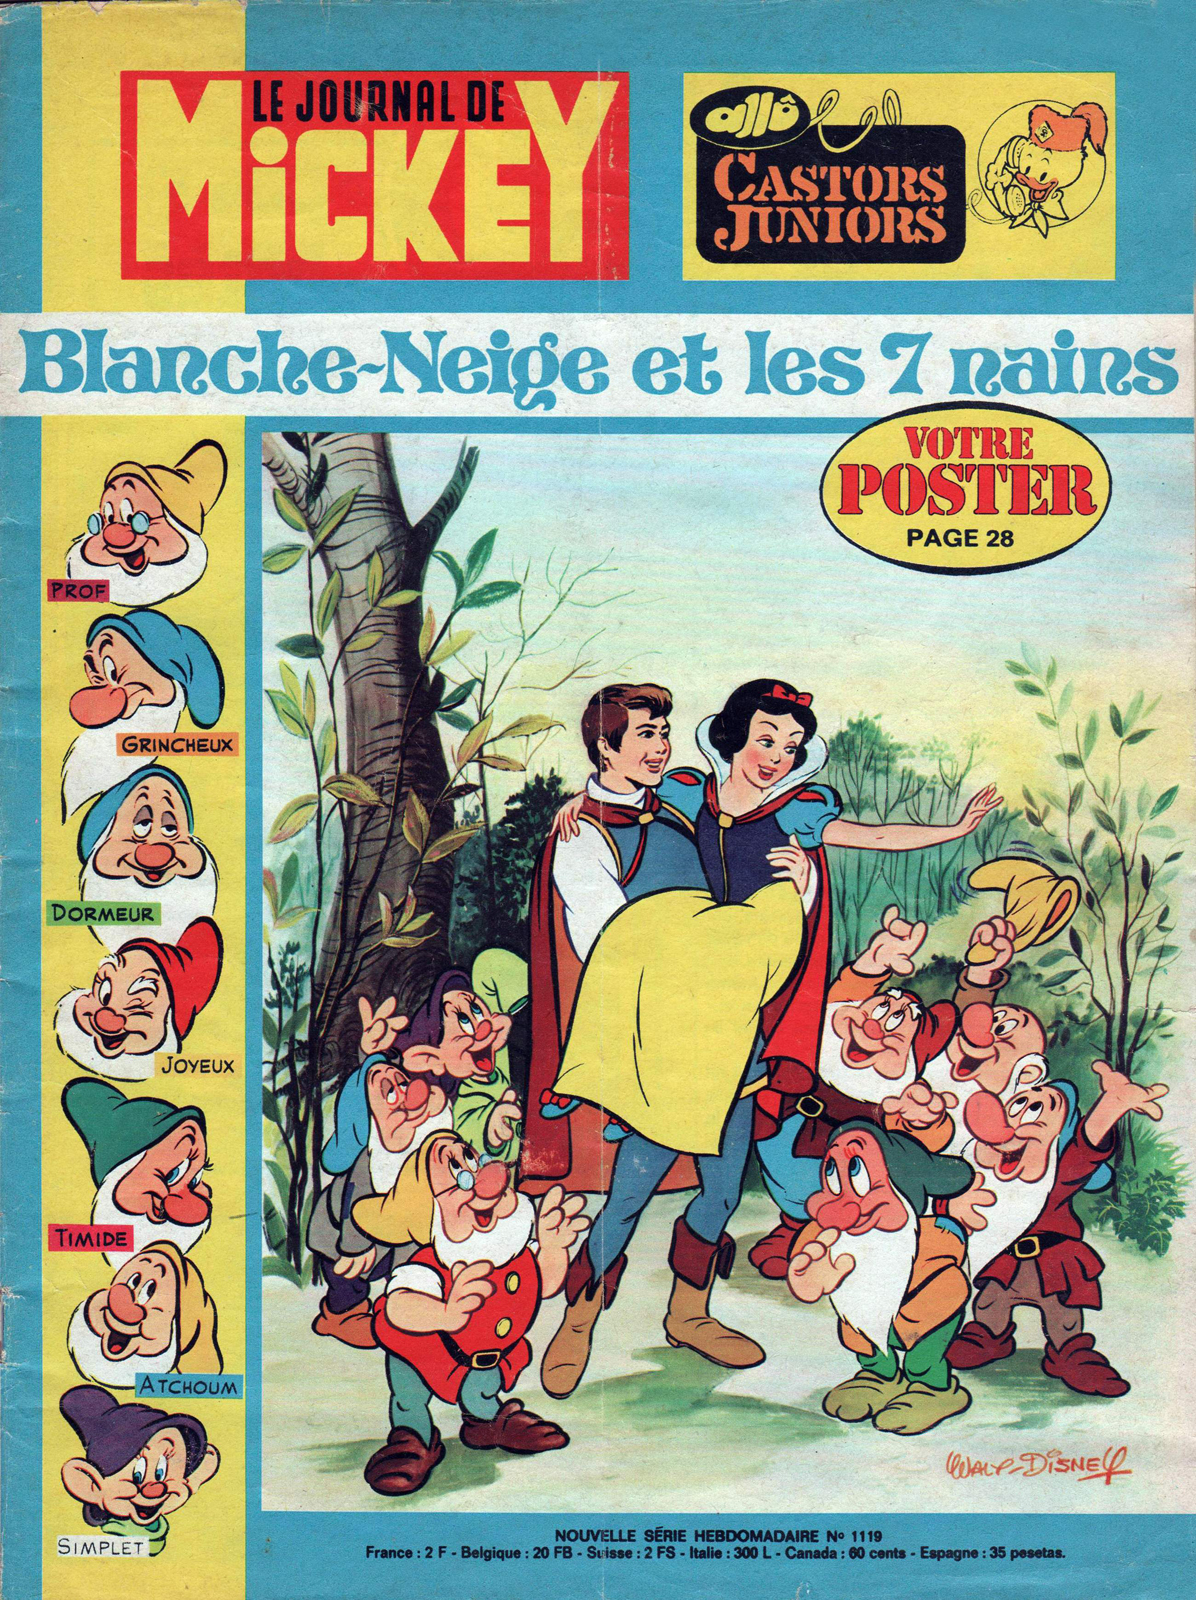 Filmic Light - Snow White Archive: 1973 Le Journal de Mickey - No